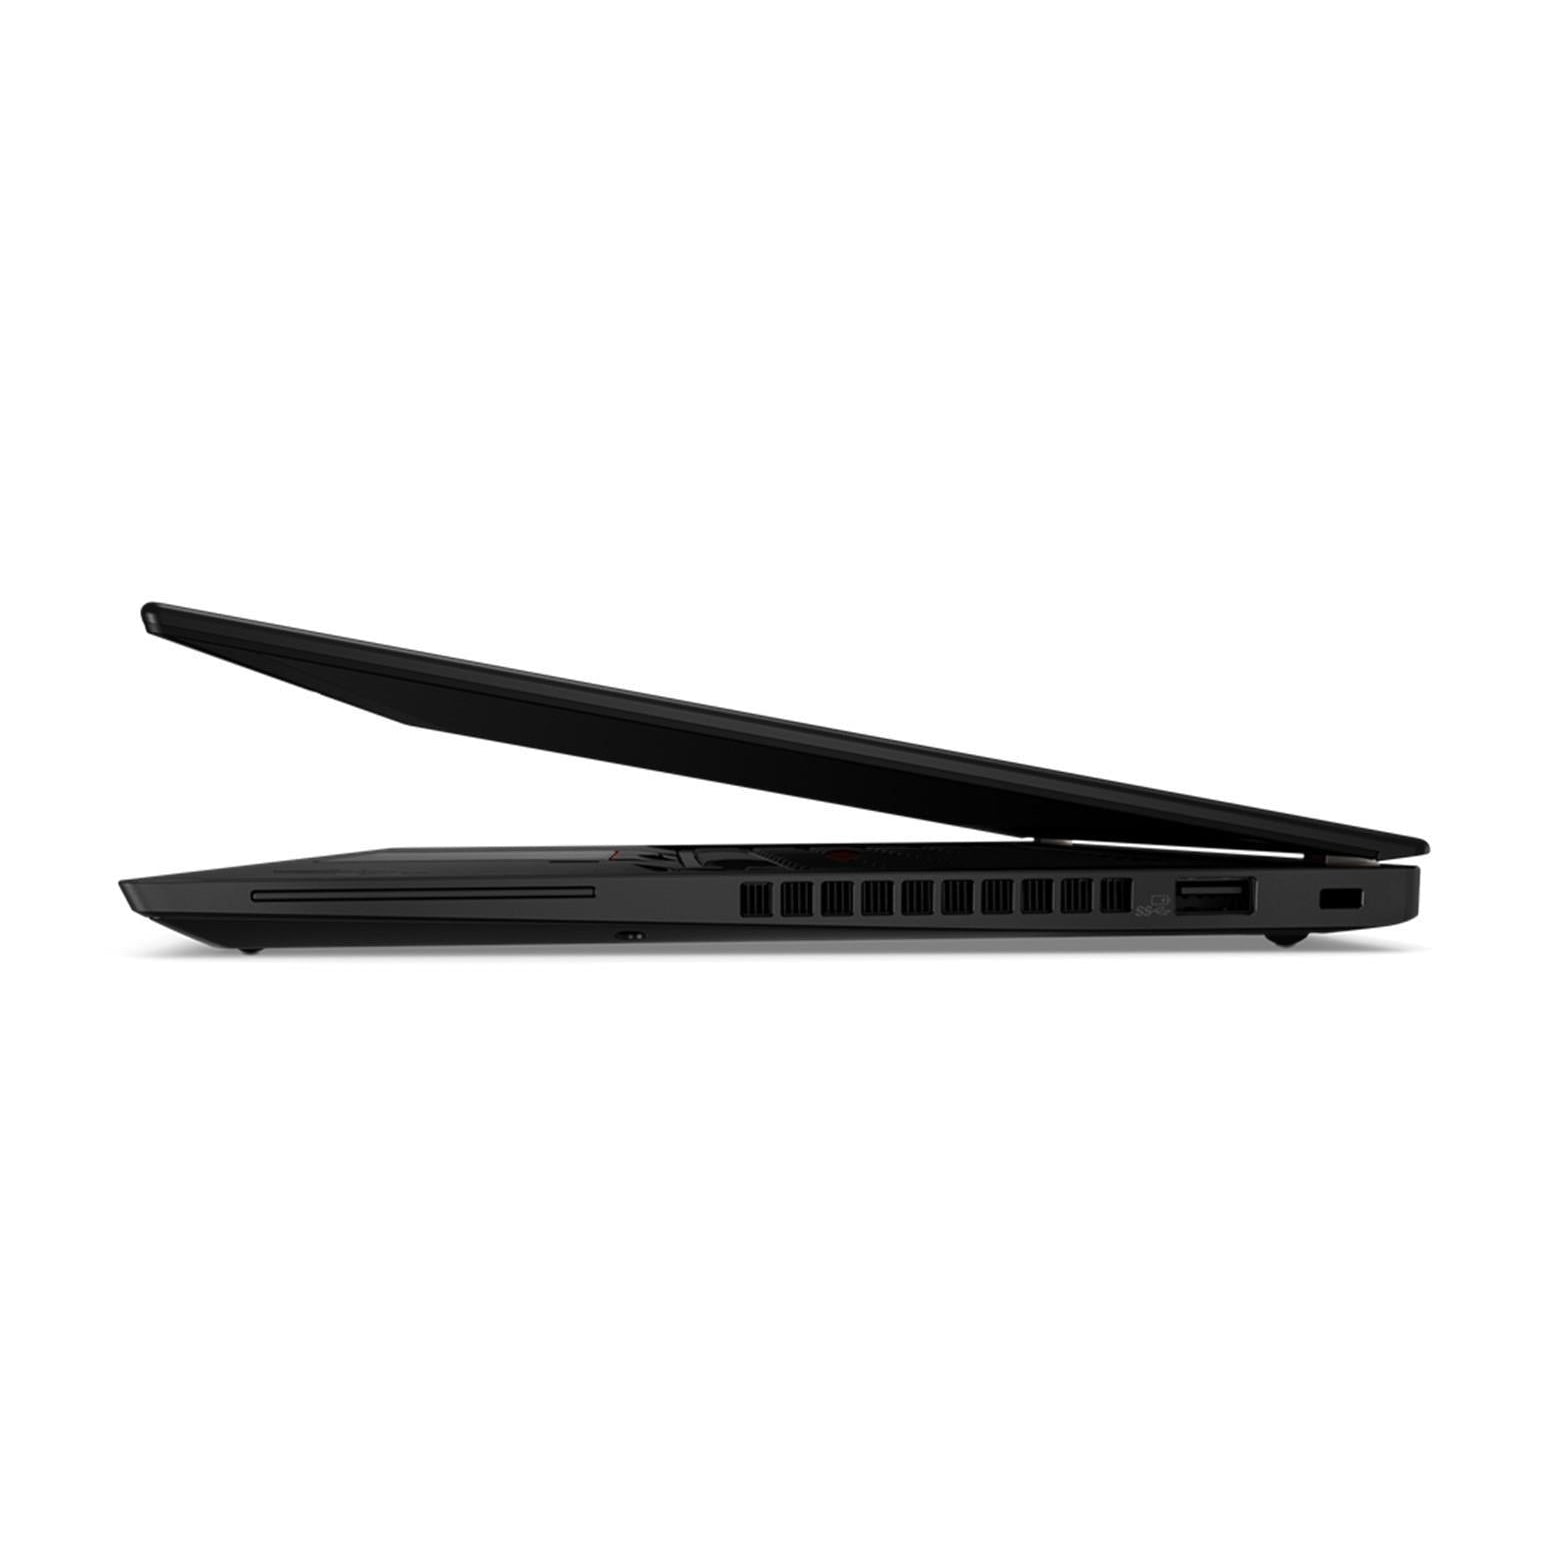 Lenovo ThinkPad X13 20T2007PUK Gen 1, Intel Core i5, 8GB RAM, 256GB SSD, Black